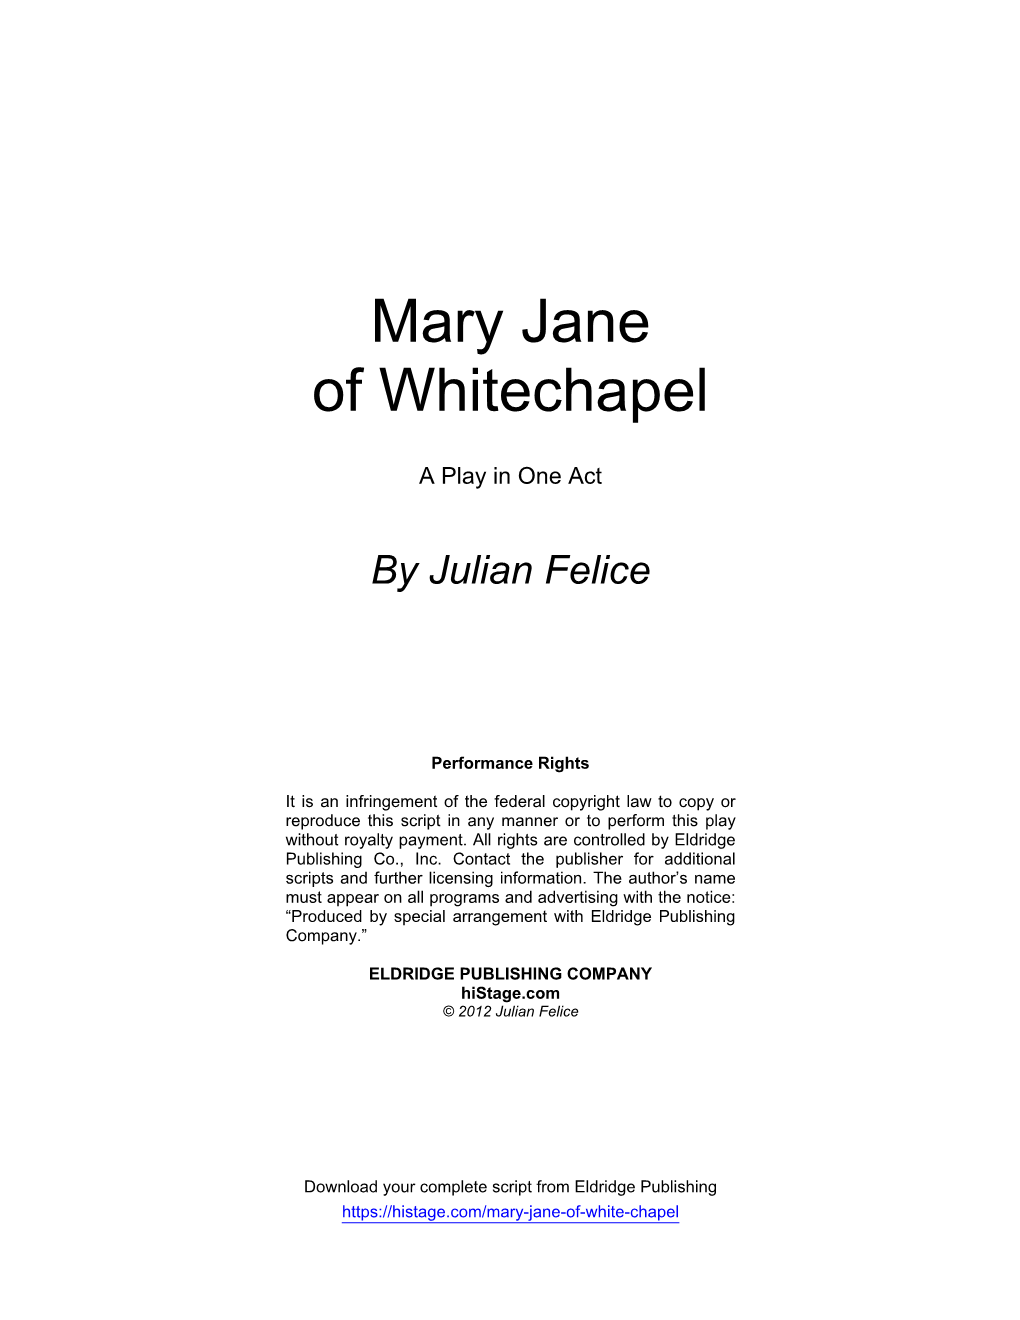 Mary Jane of Whitechapel